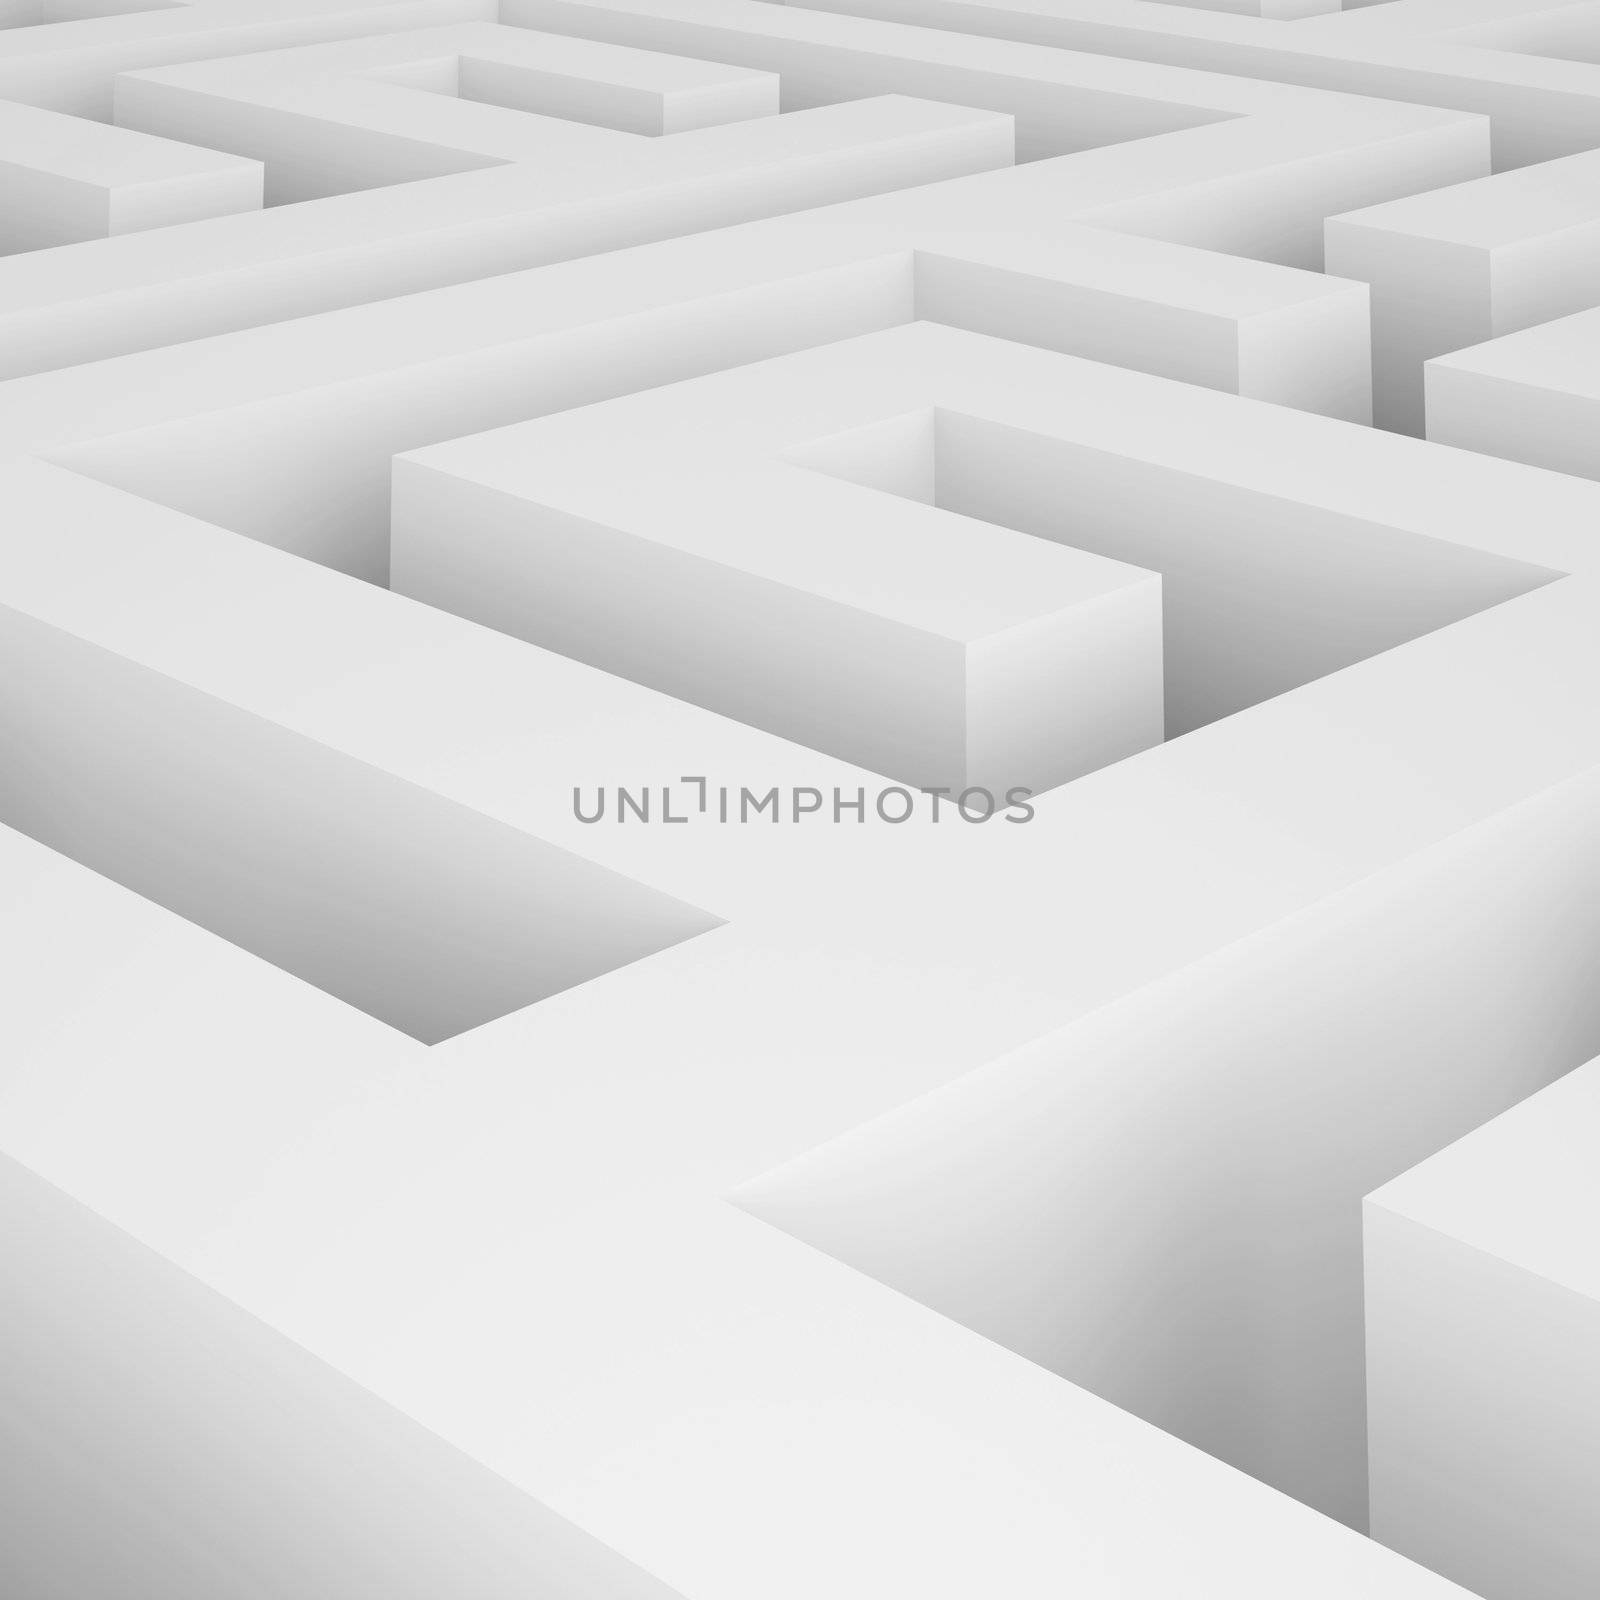 3d Illustration of White Maze Background or Wallpaper